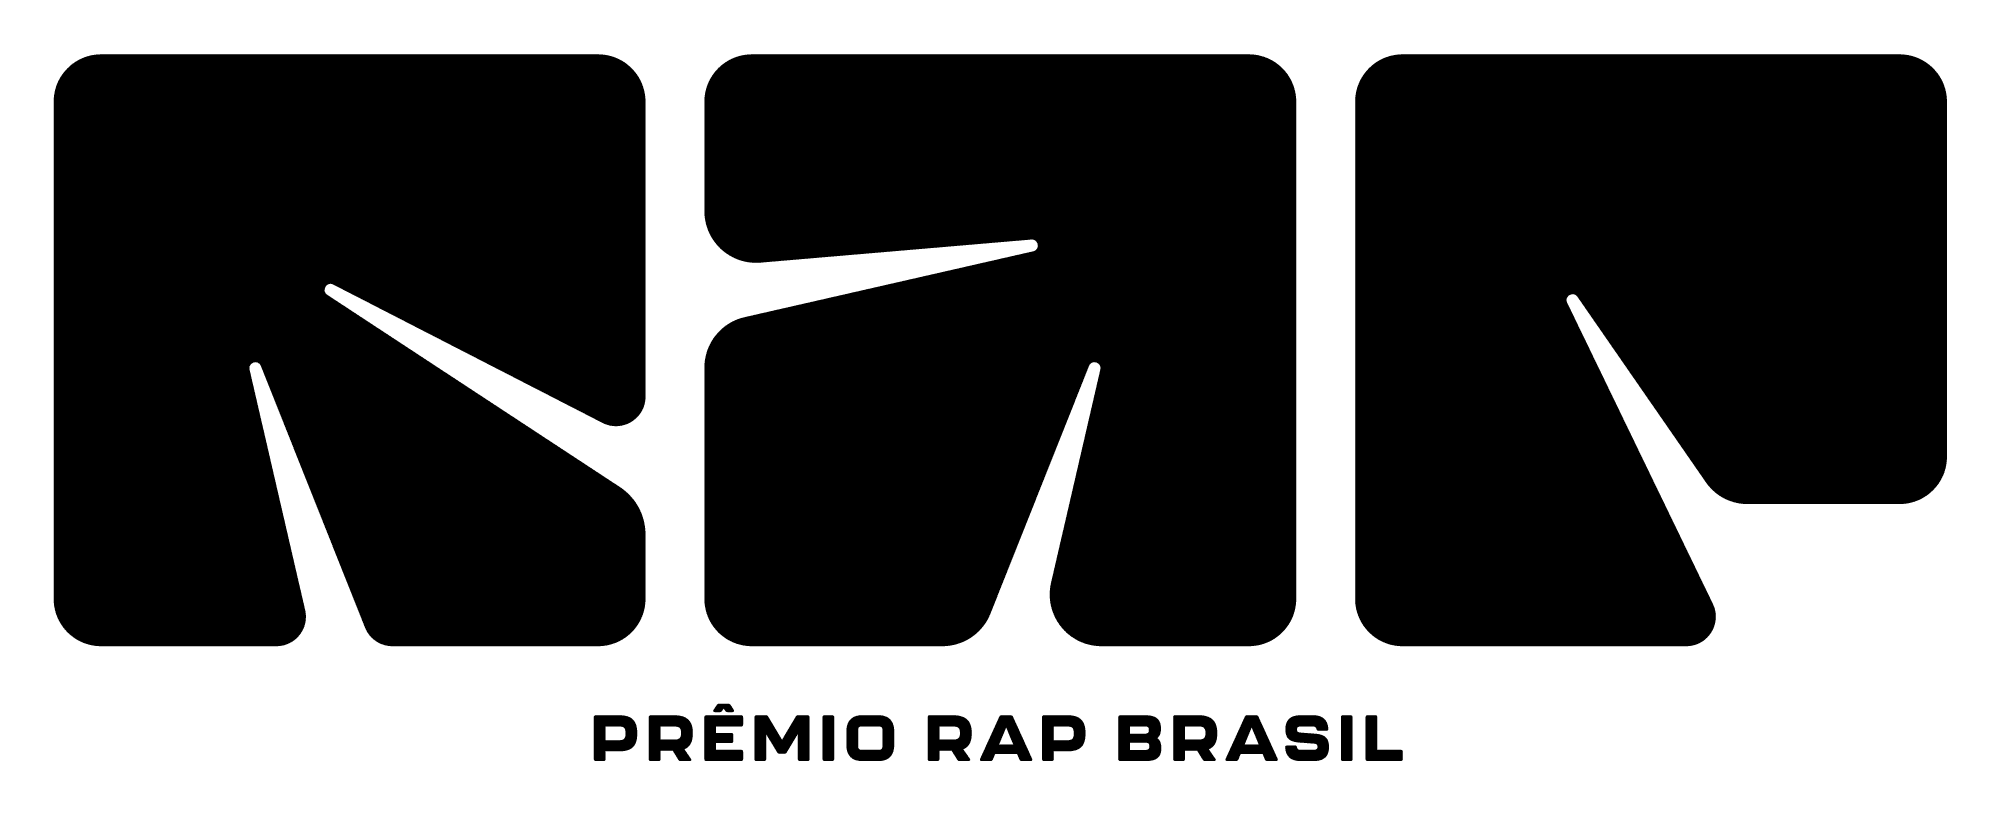 prb logo 1